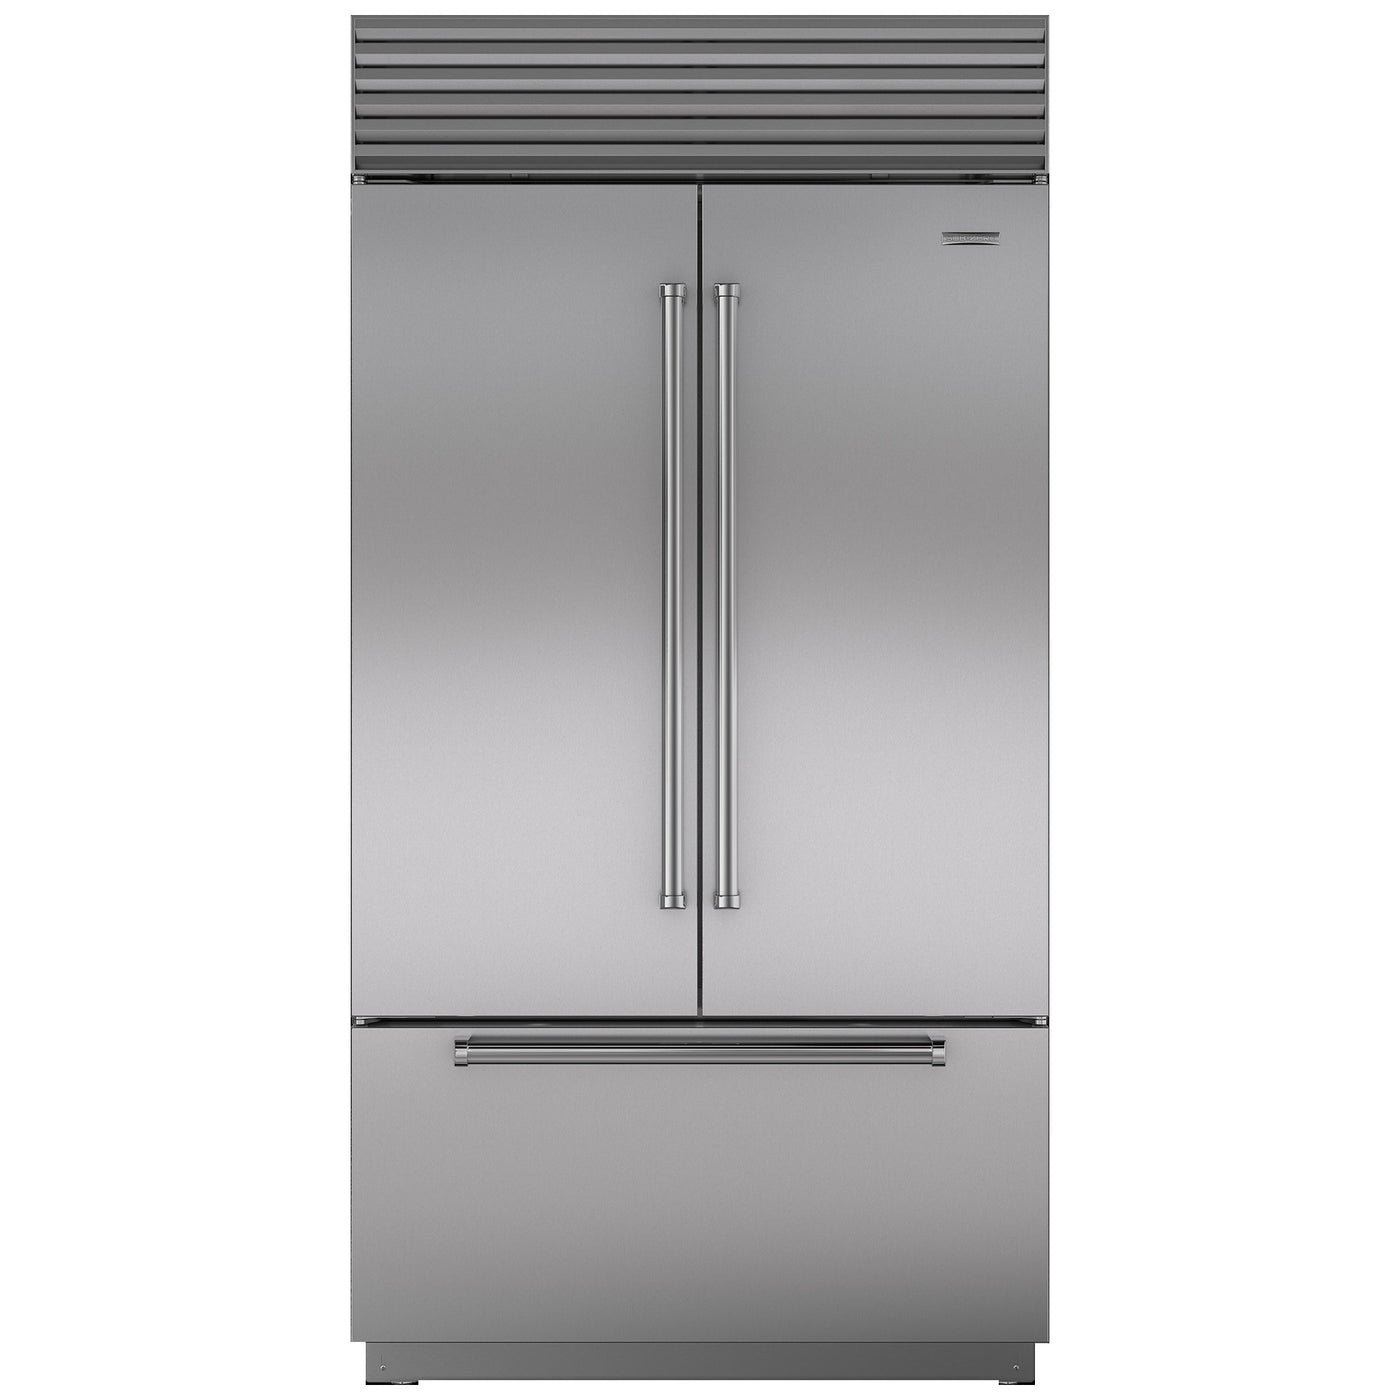 SubZero-refrigerator-CL4250UFDIDSP